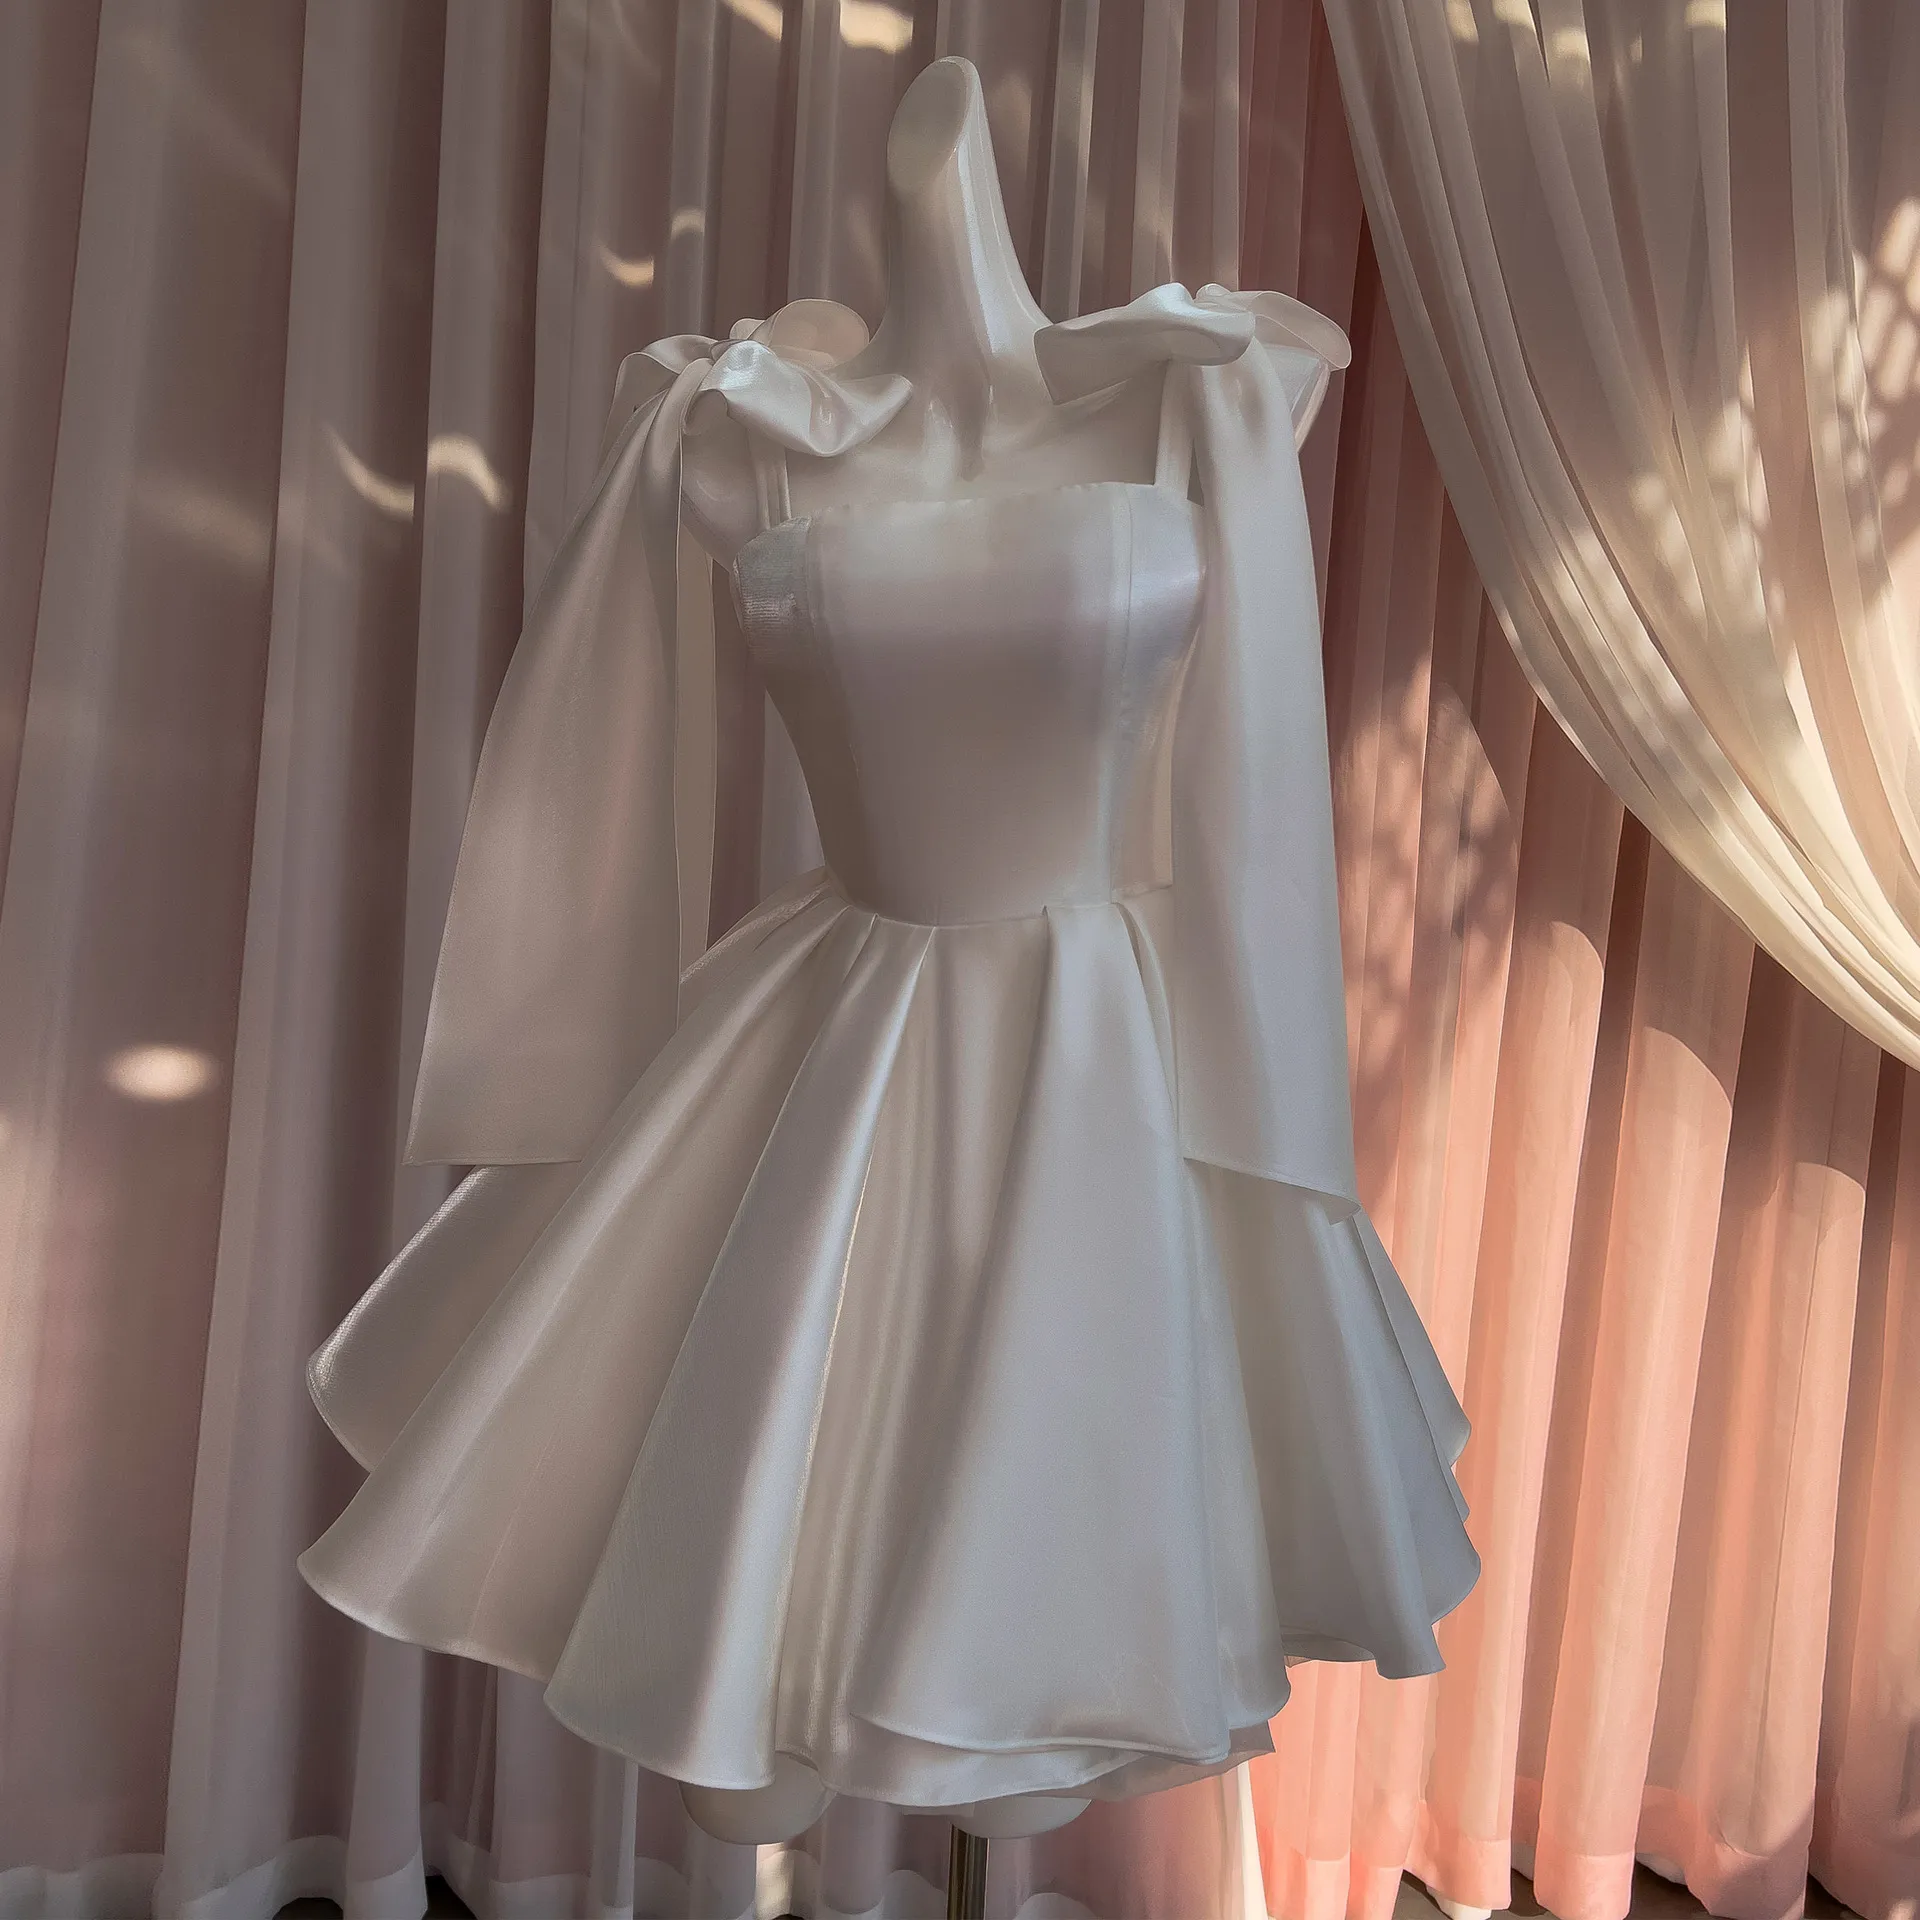 French retro bow top dress, fluffy skirt, suspender dress, birthday party evening dress 68404